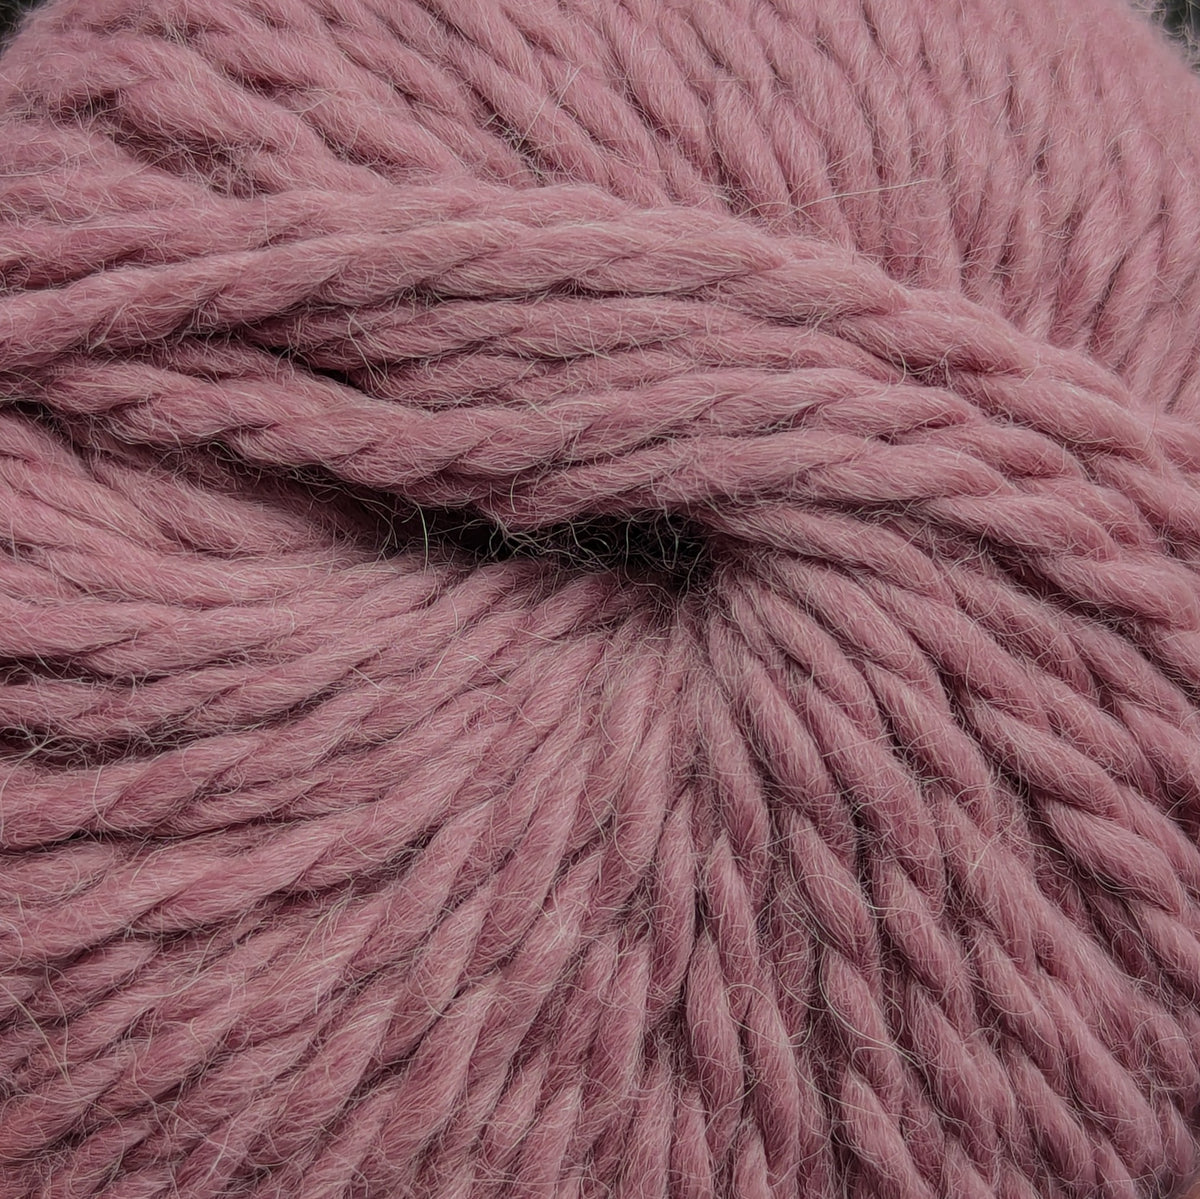 Soft dusty rose pink bulky alpaca wool yarn for knitting and crochet